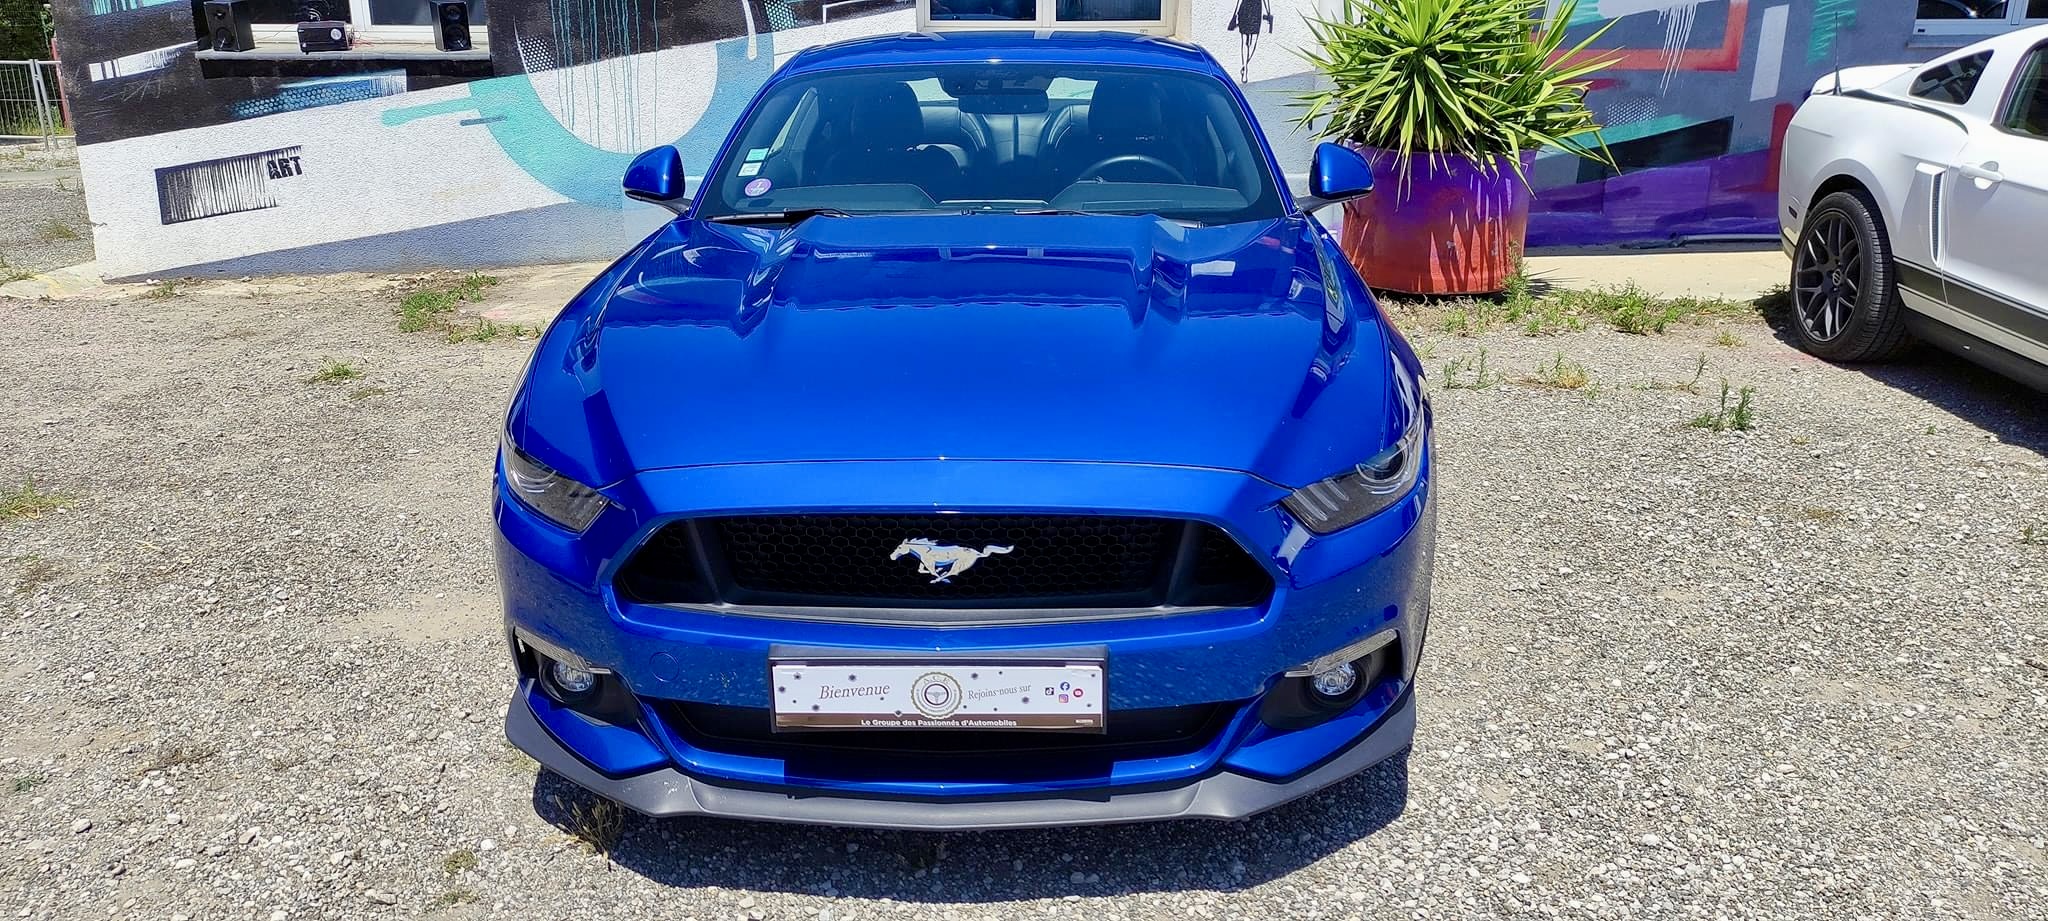 Mustang bleue